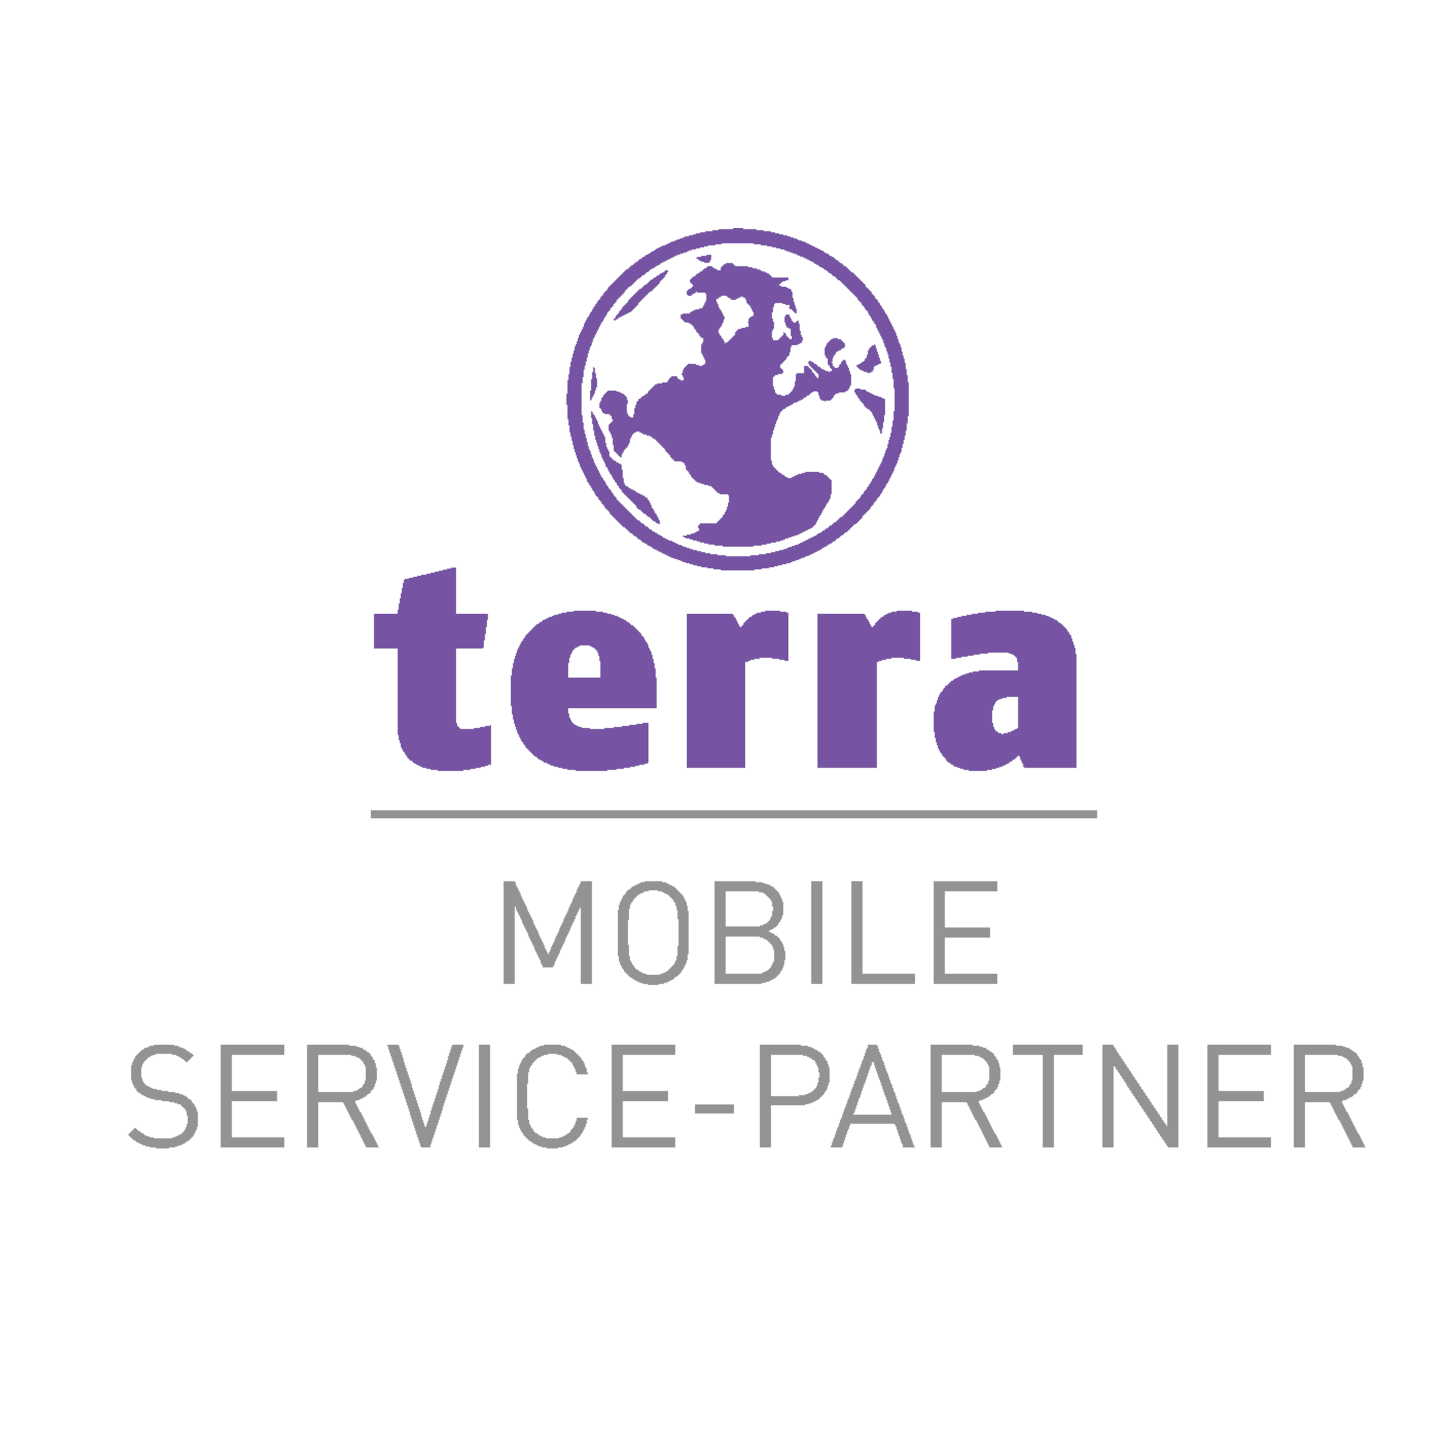 Terra Mobile Service